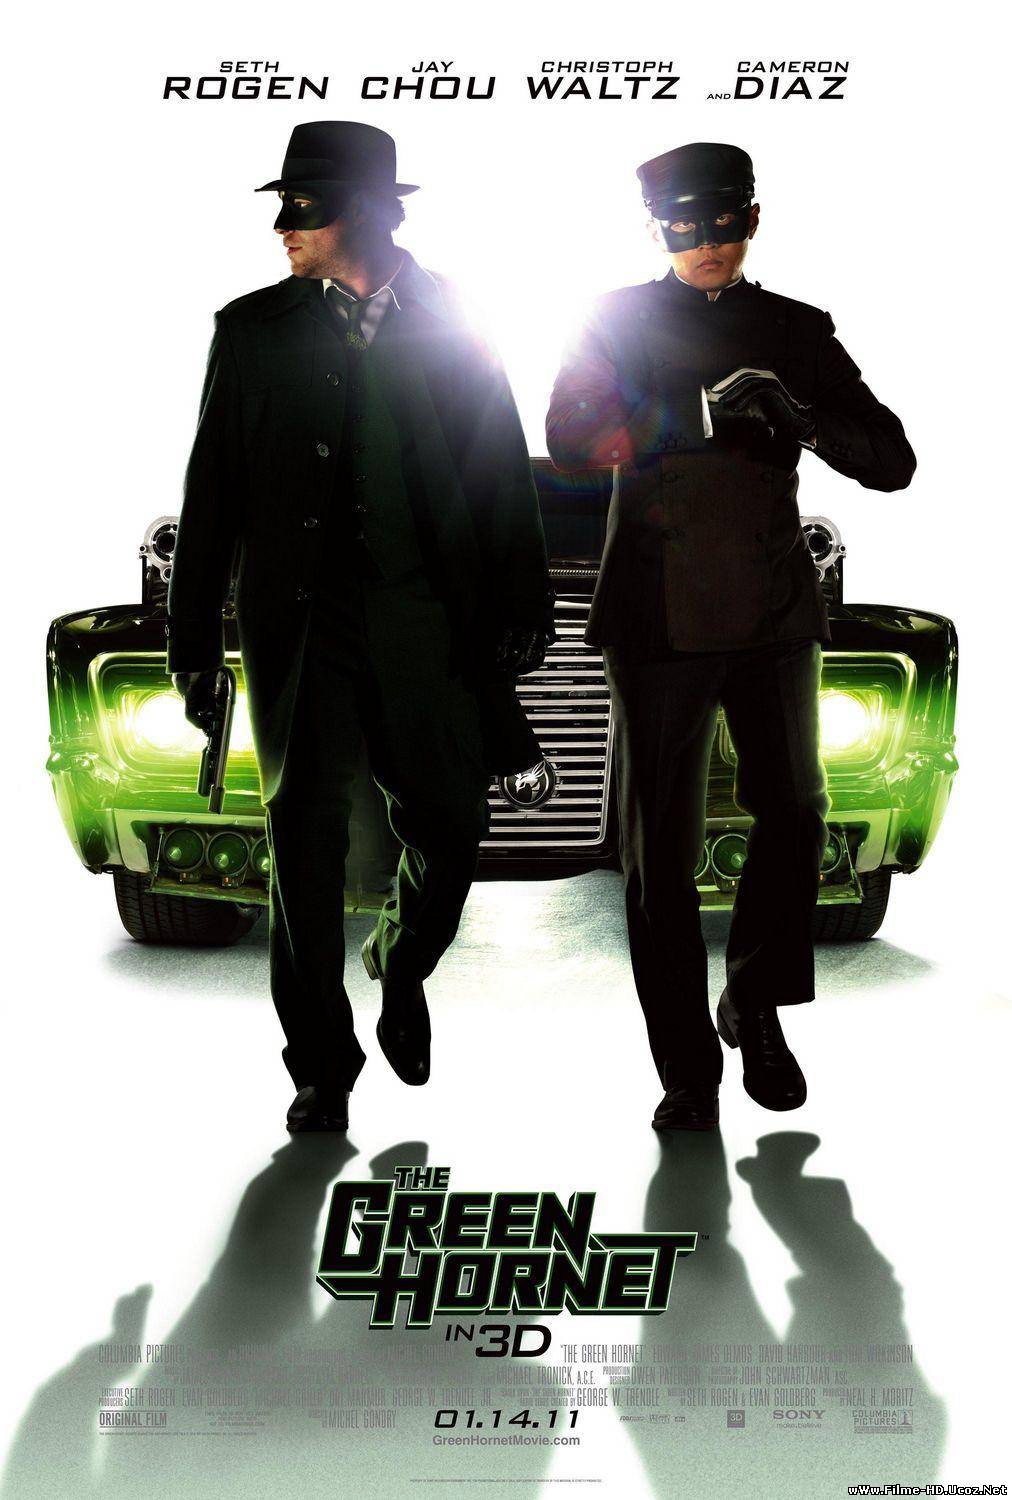 Viespea verde - The Green Hornet (2011)